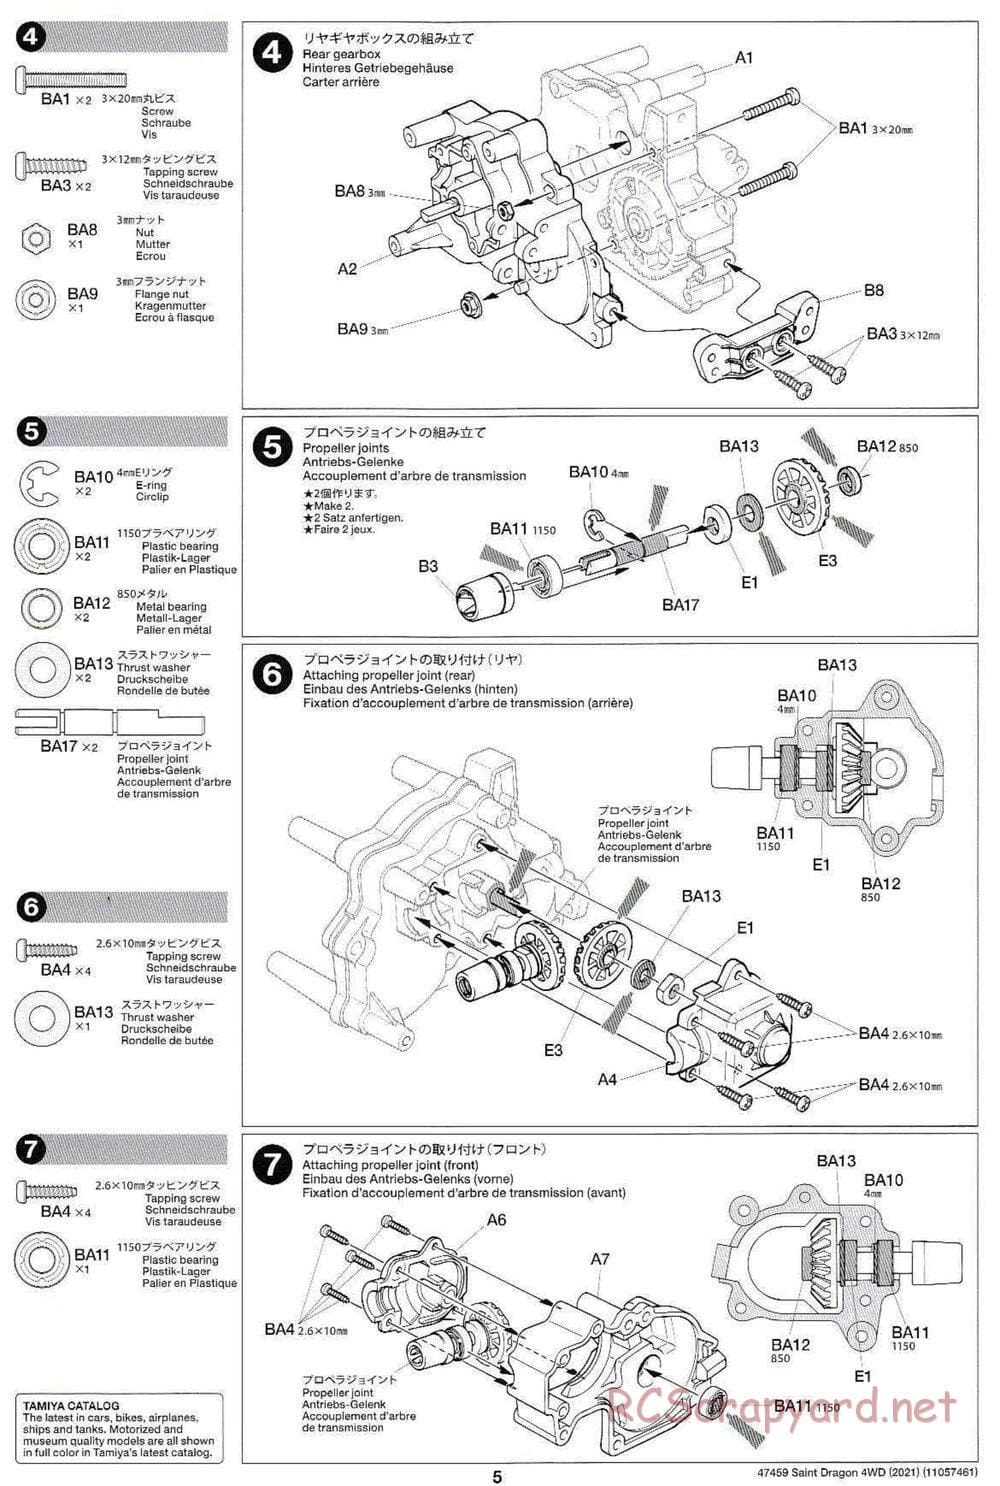 Tamiya - Saint Dragon (2021) Chassis - Manual - Page 5